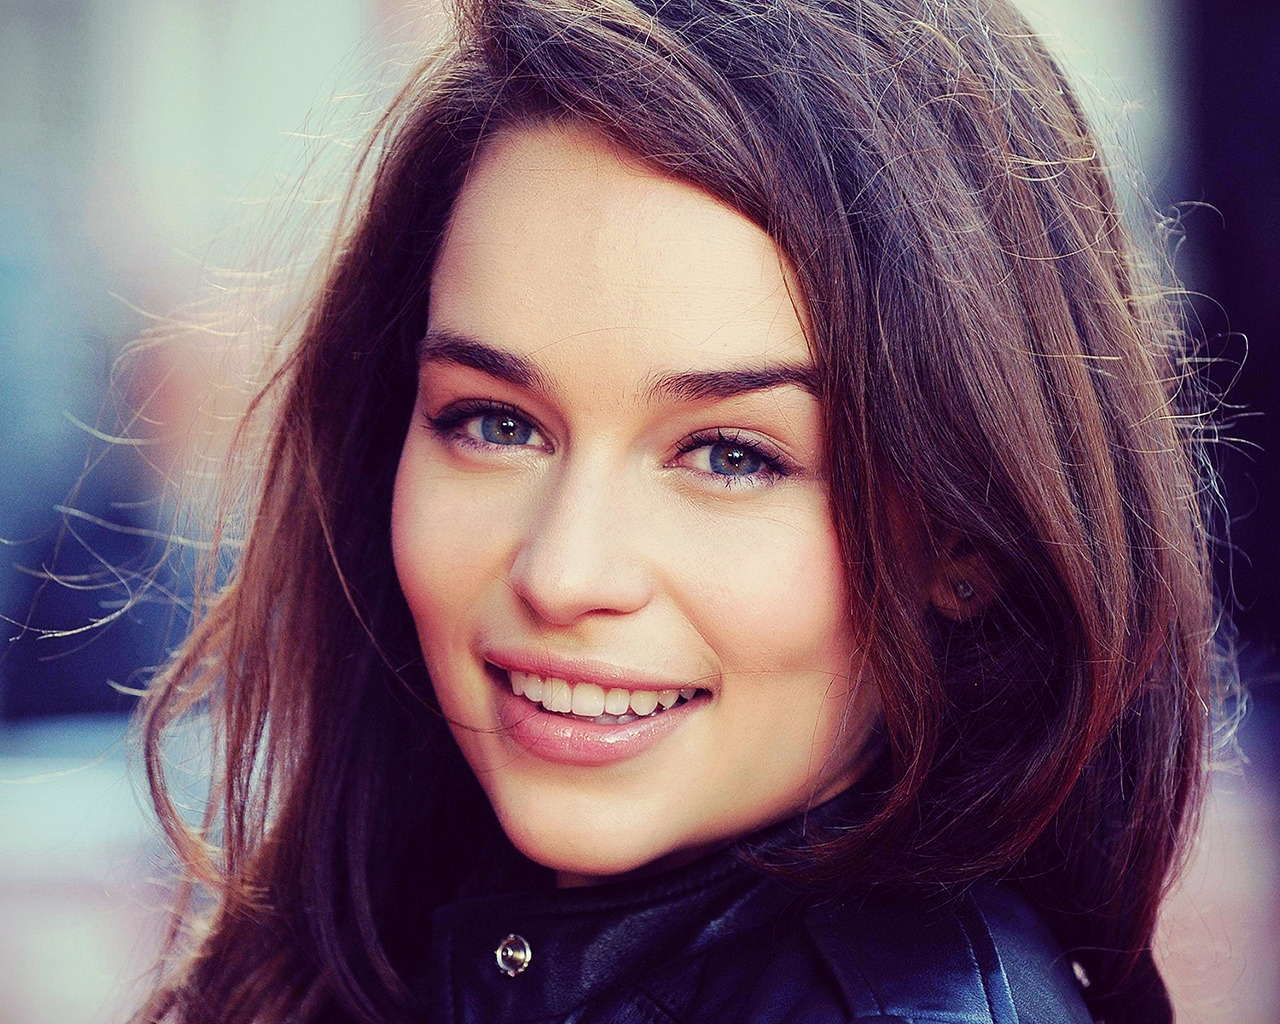 Gorgeous Emilia Clarke for 1280 x 1024 resolution